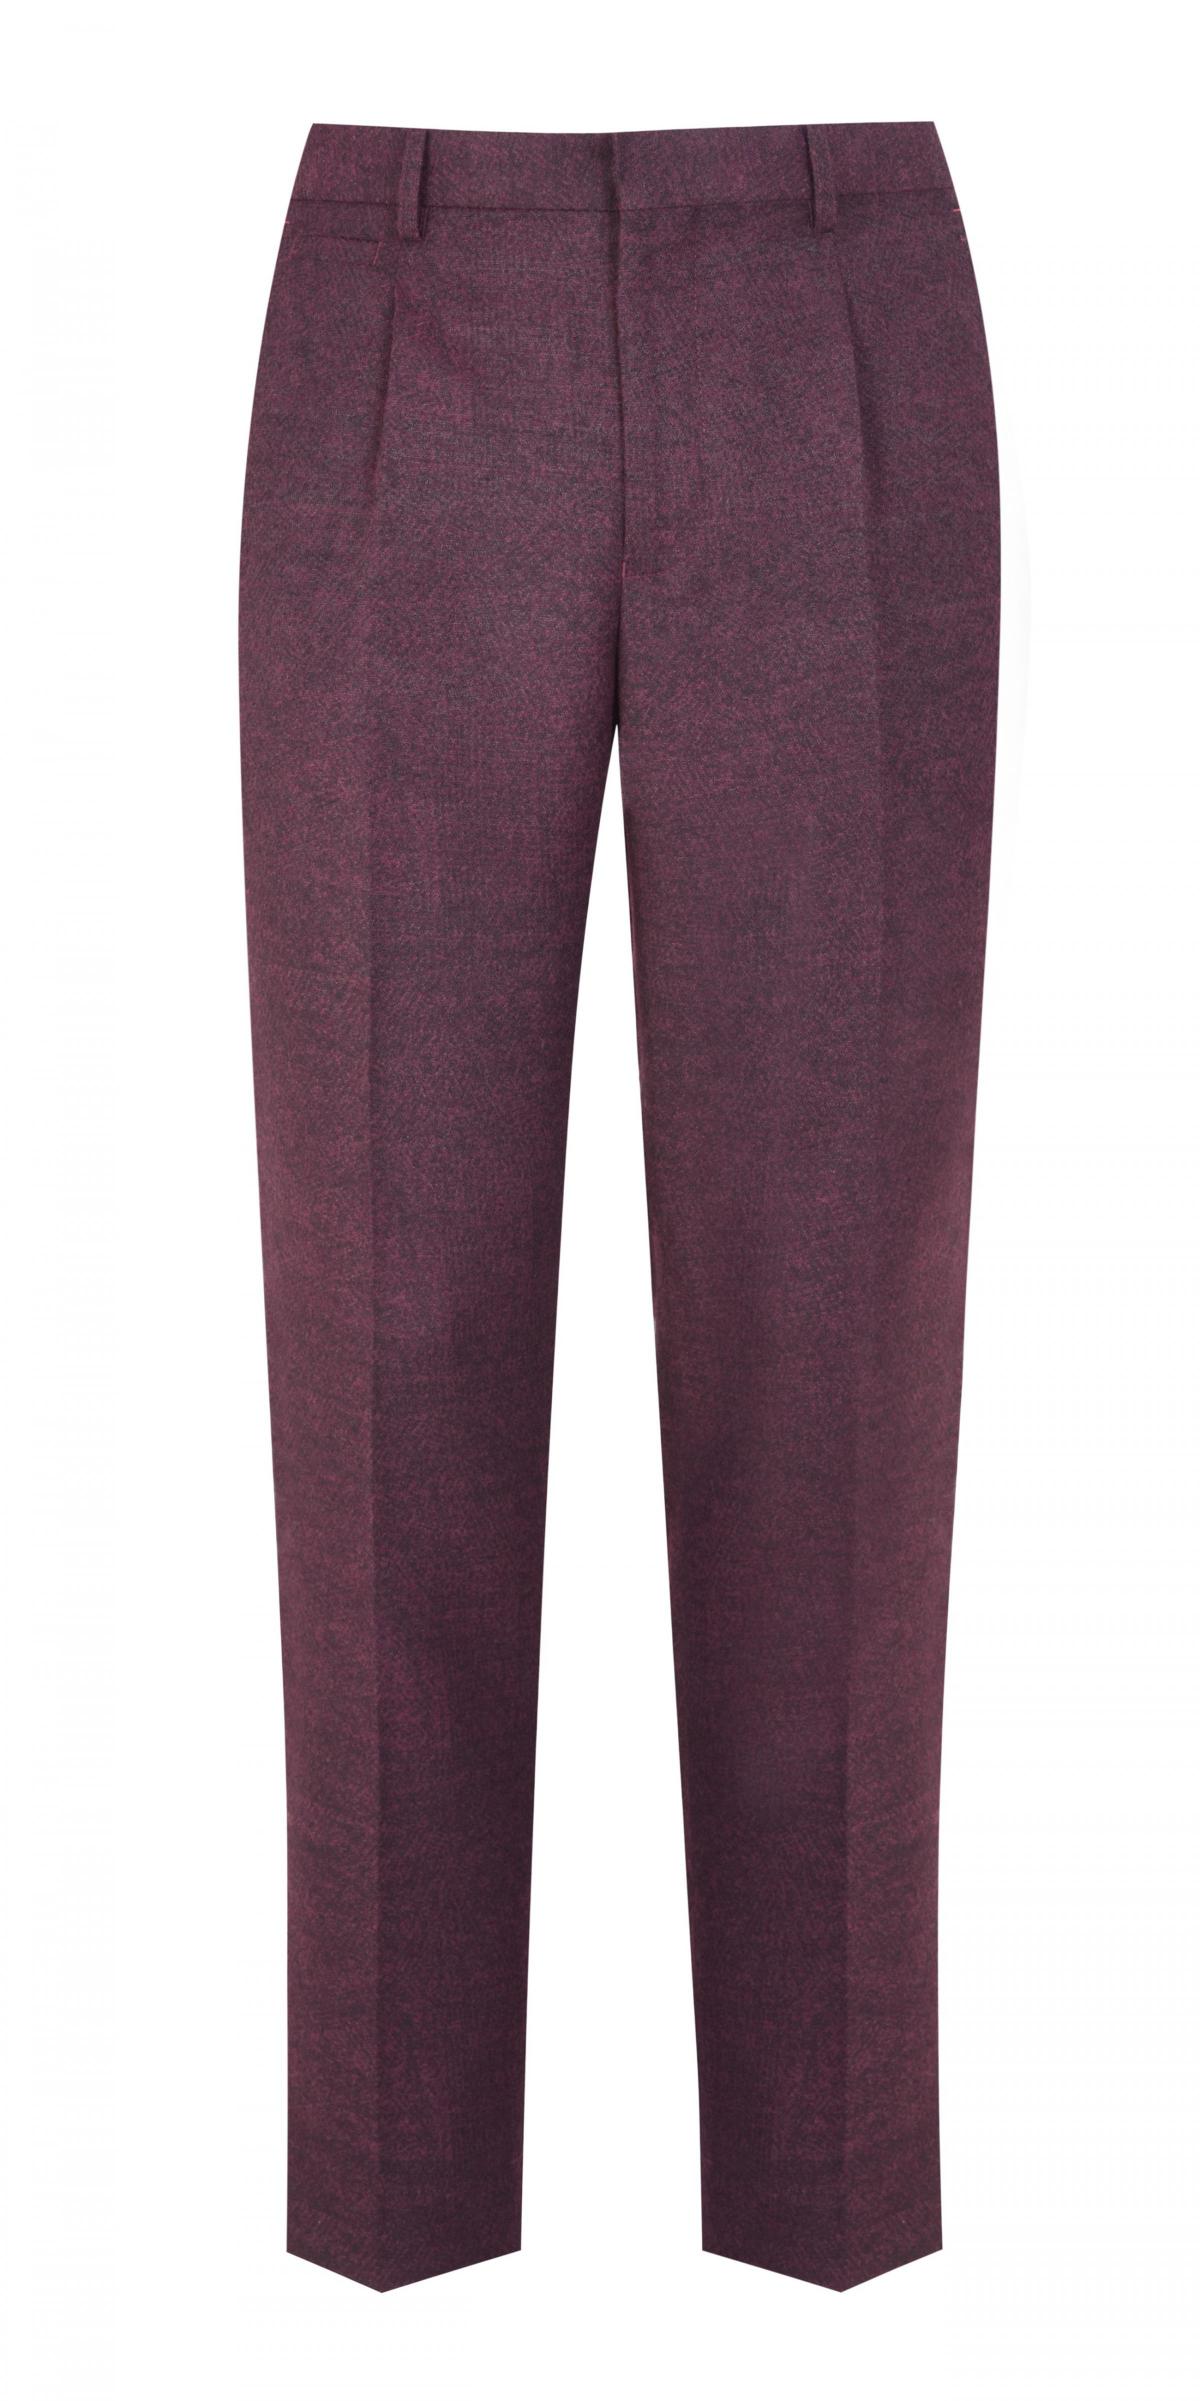 Burton, Montague Burgundy Wool Trousers, £40